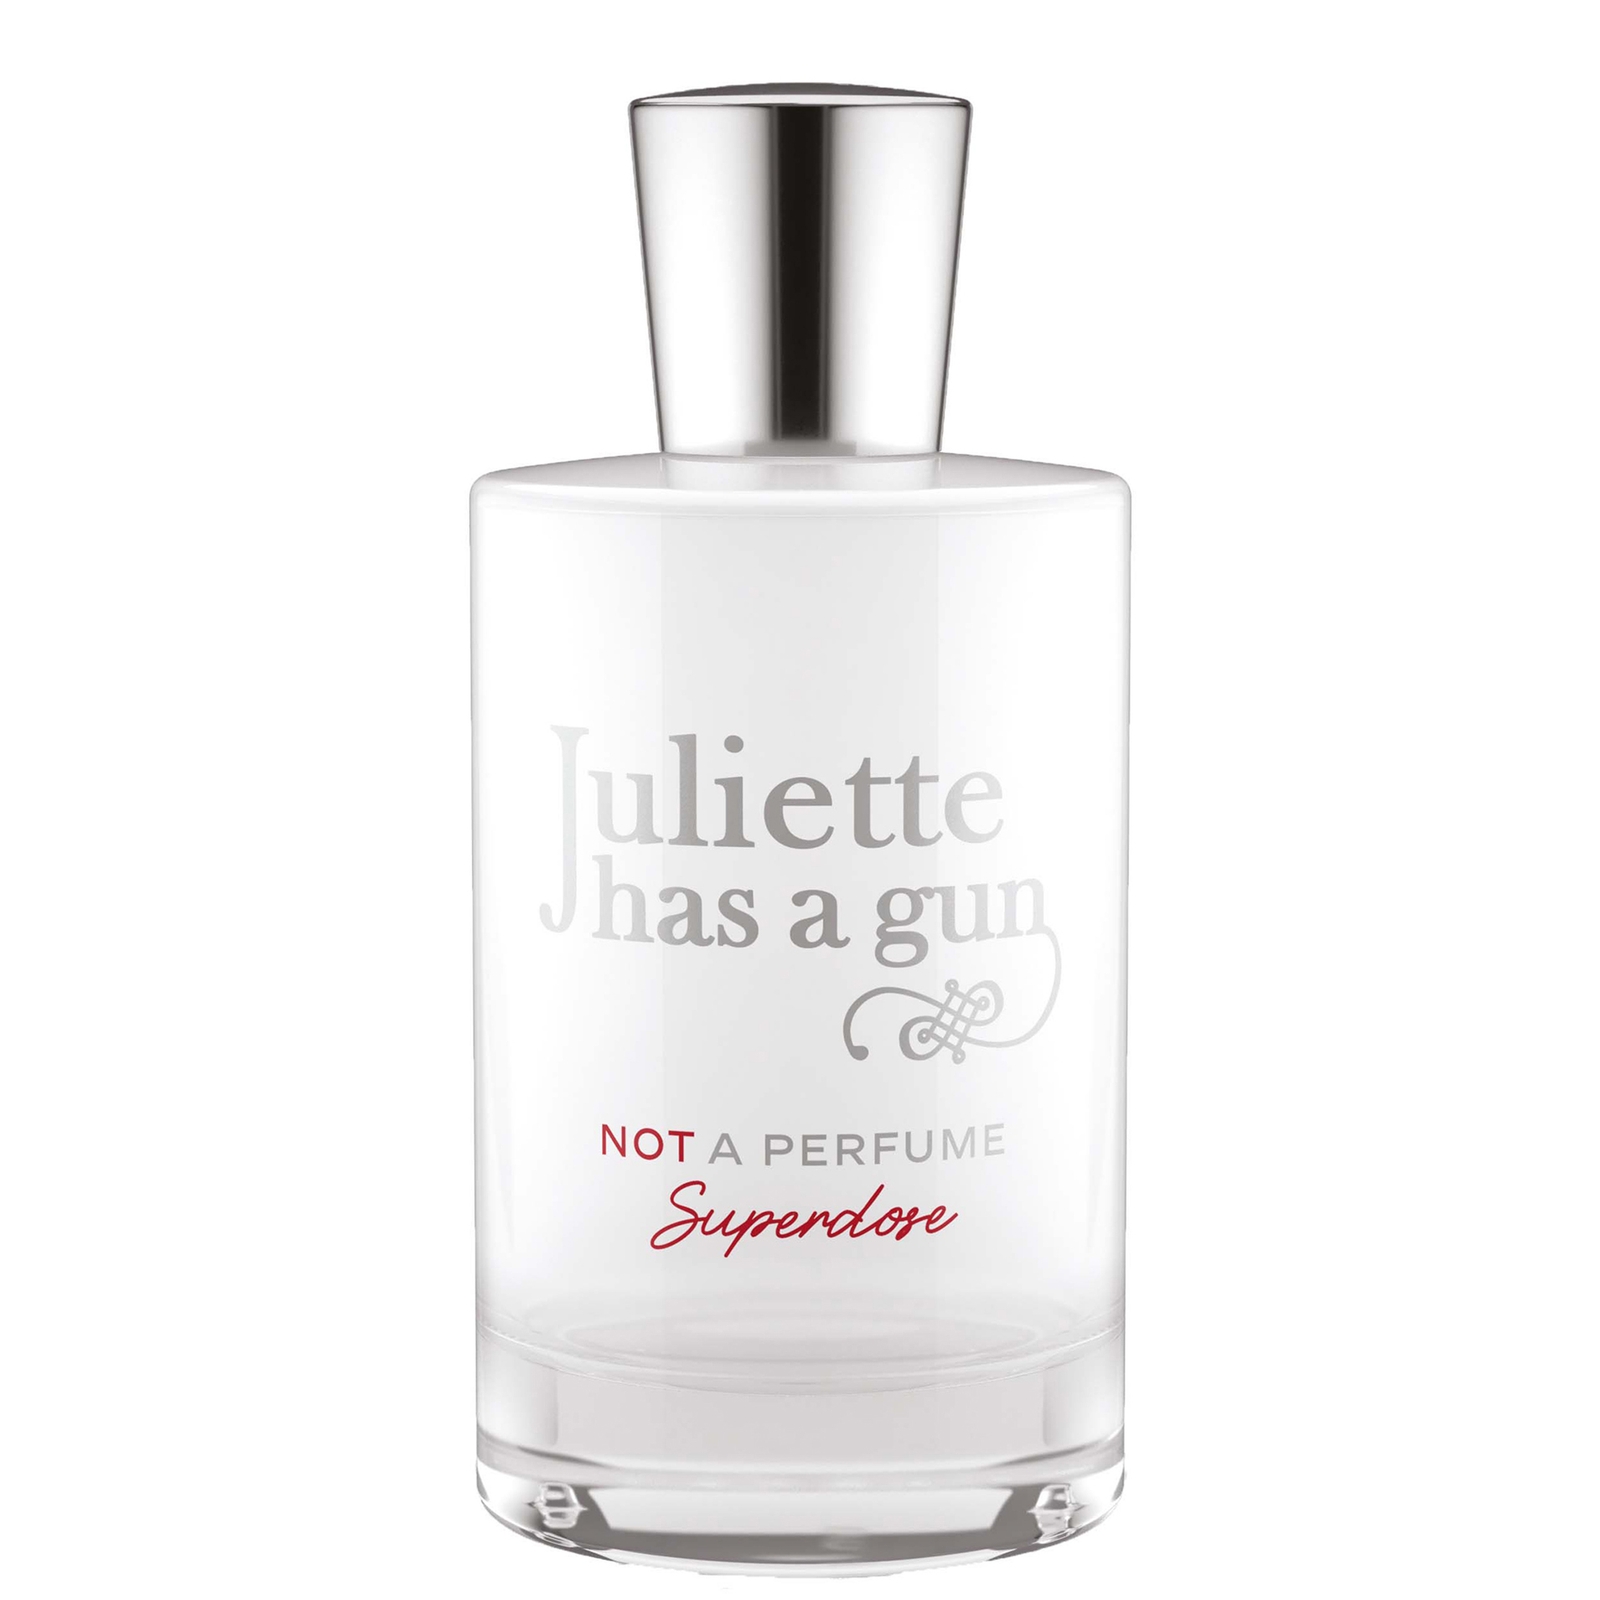 Photos - Women's Fragrance Juliette Has a Gun Not a Perfume Superdose Eau de Parfum 100ml JNOTSUPER-1 